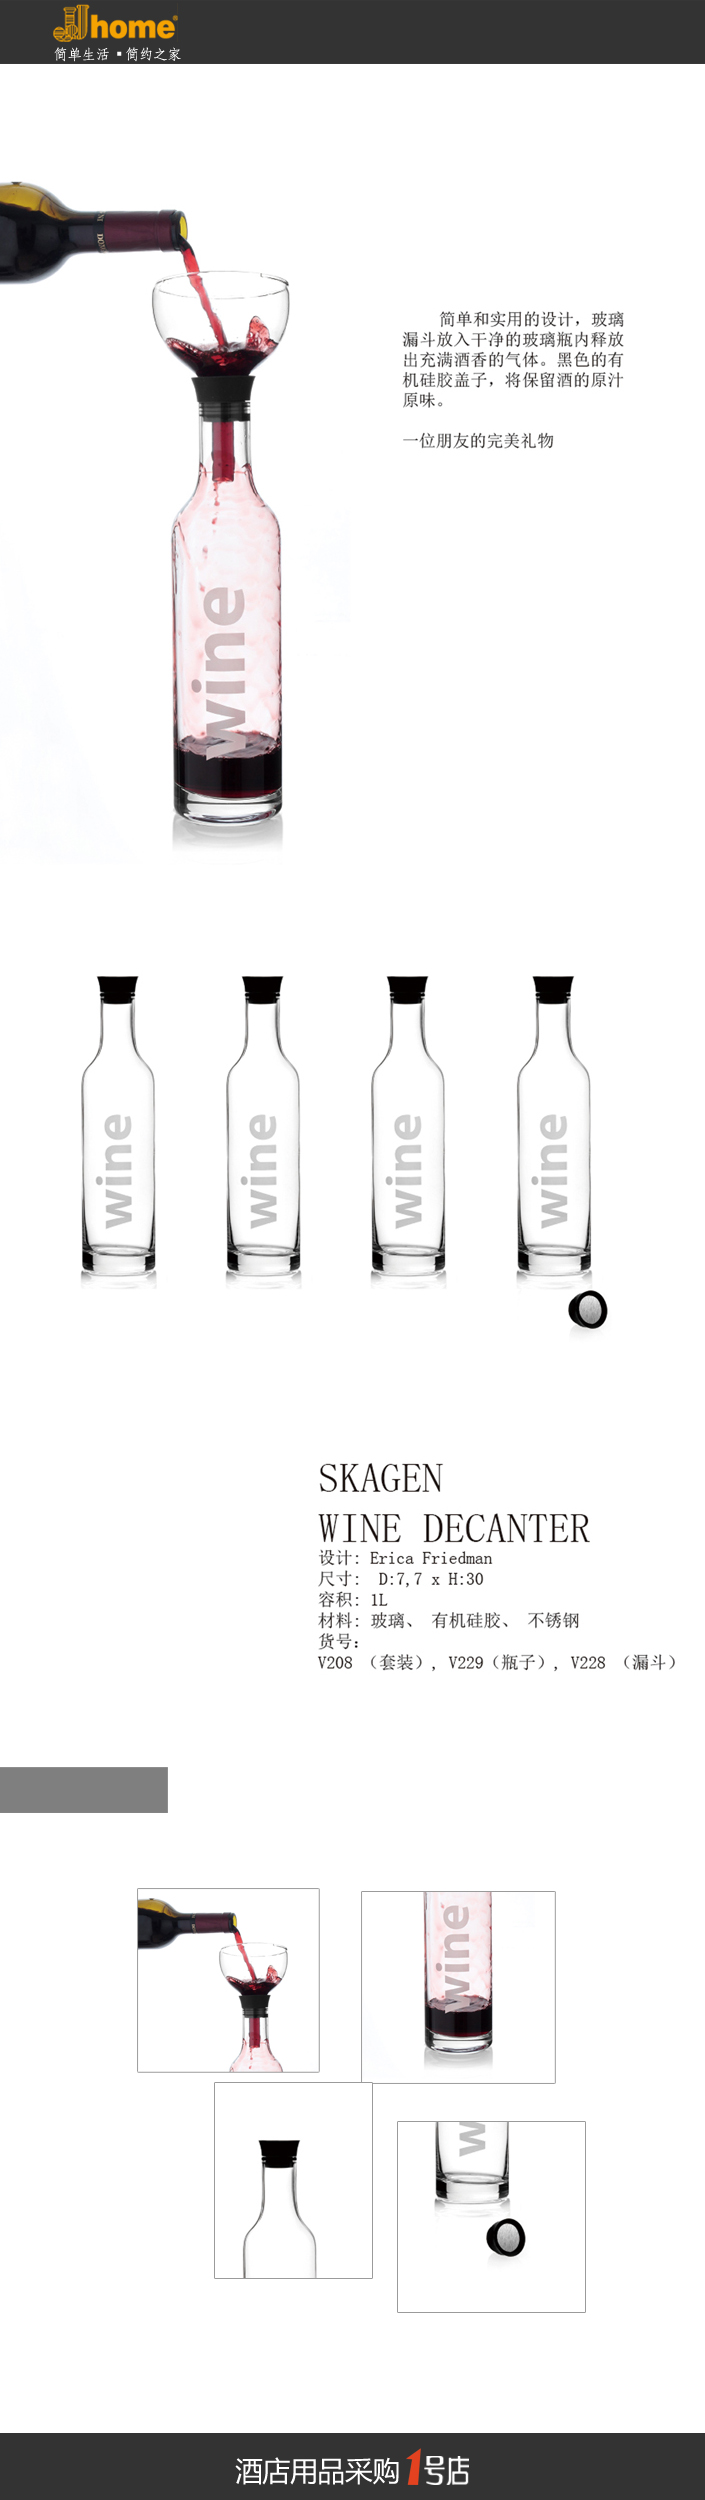 VIVA北欧活力 Wine Decanter 红酒瓶简易醒酒器套装 JJHOME酒店用品1号店